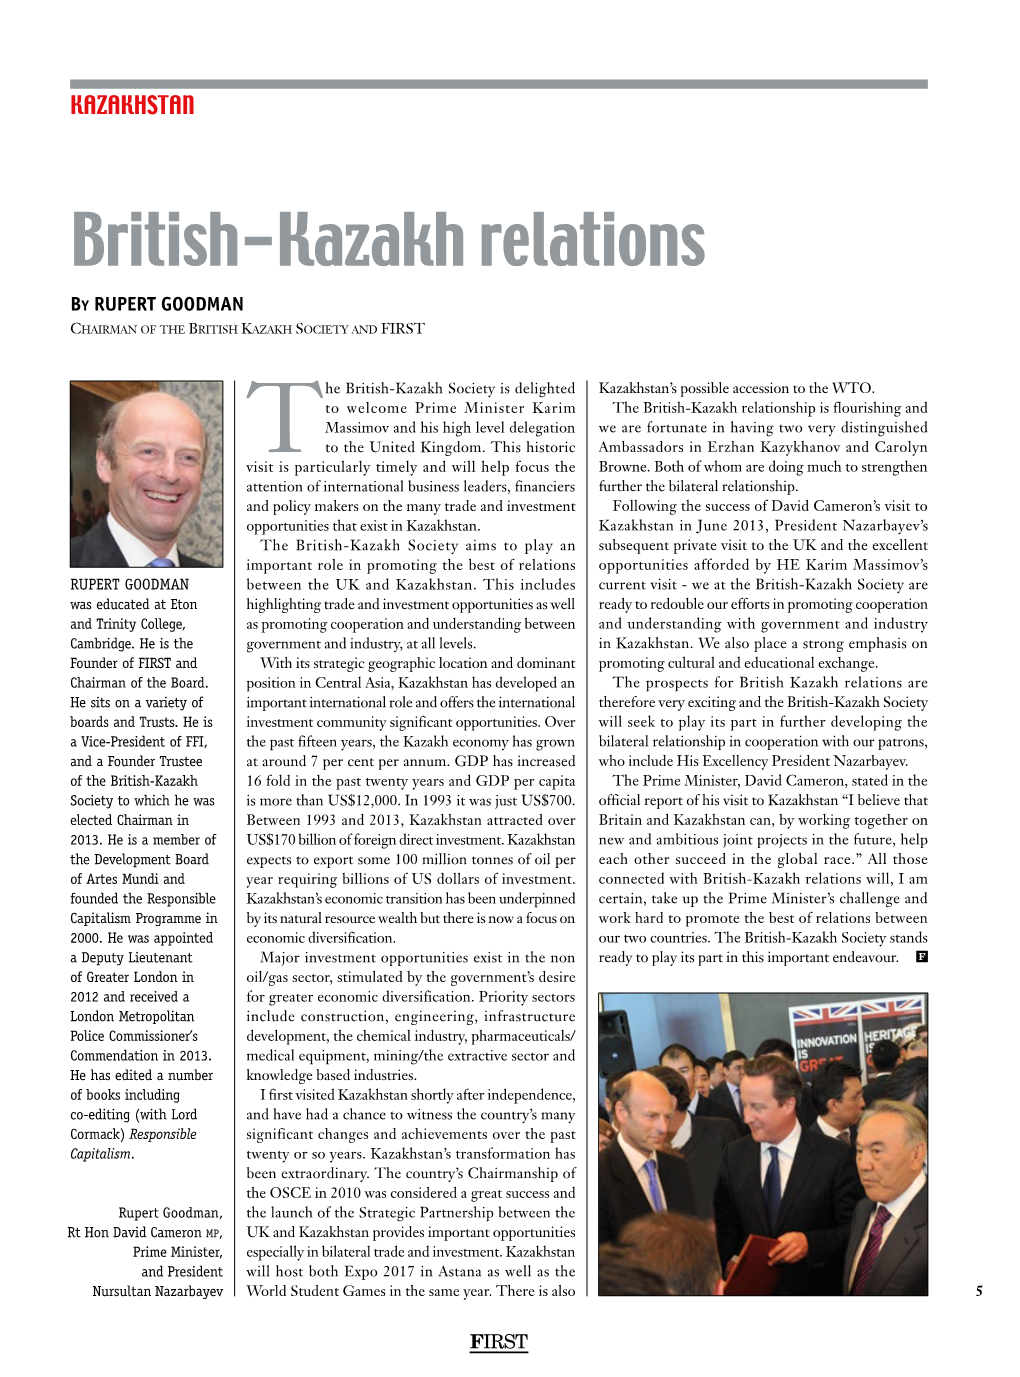 British-Kazakh Relations by RUPERT GOODMAN Chairman of the British Kazakh Society and FIRST